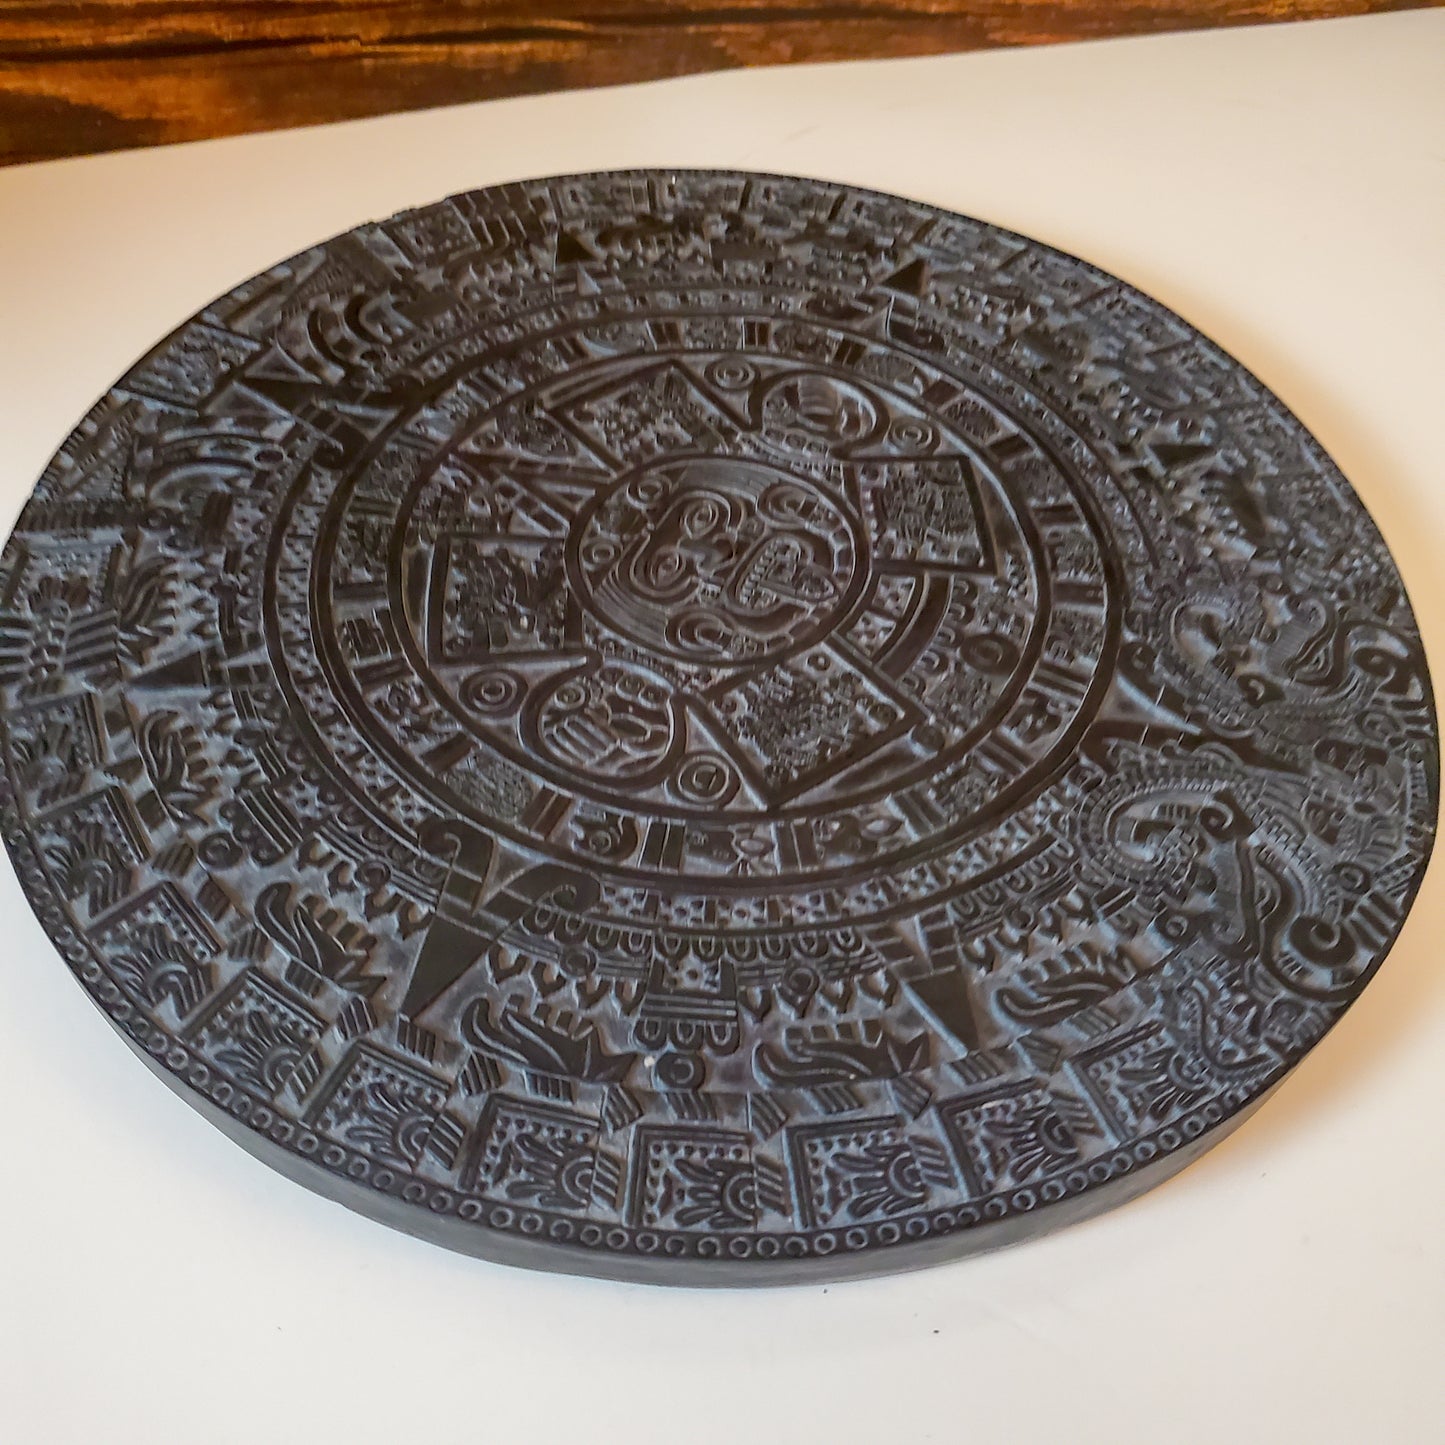 Black Aztec Calendar Wall Plaque Hanging | Mayan Gods Wall Decor | Handmade 12"